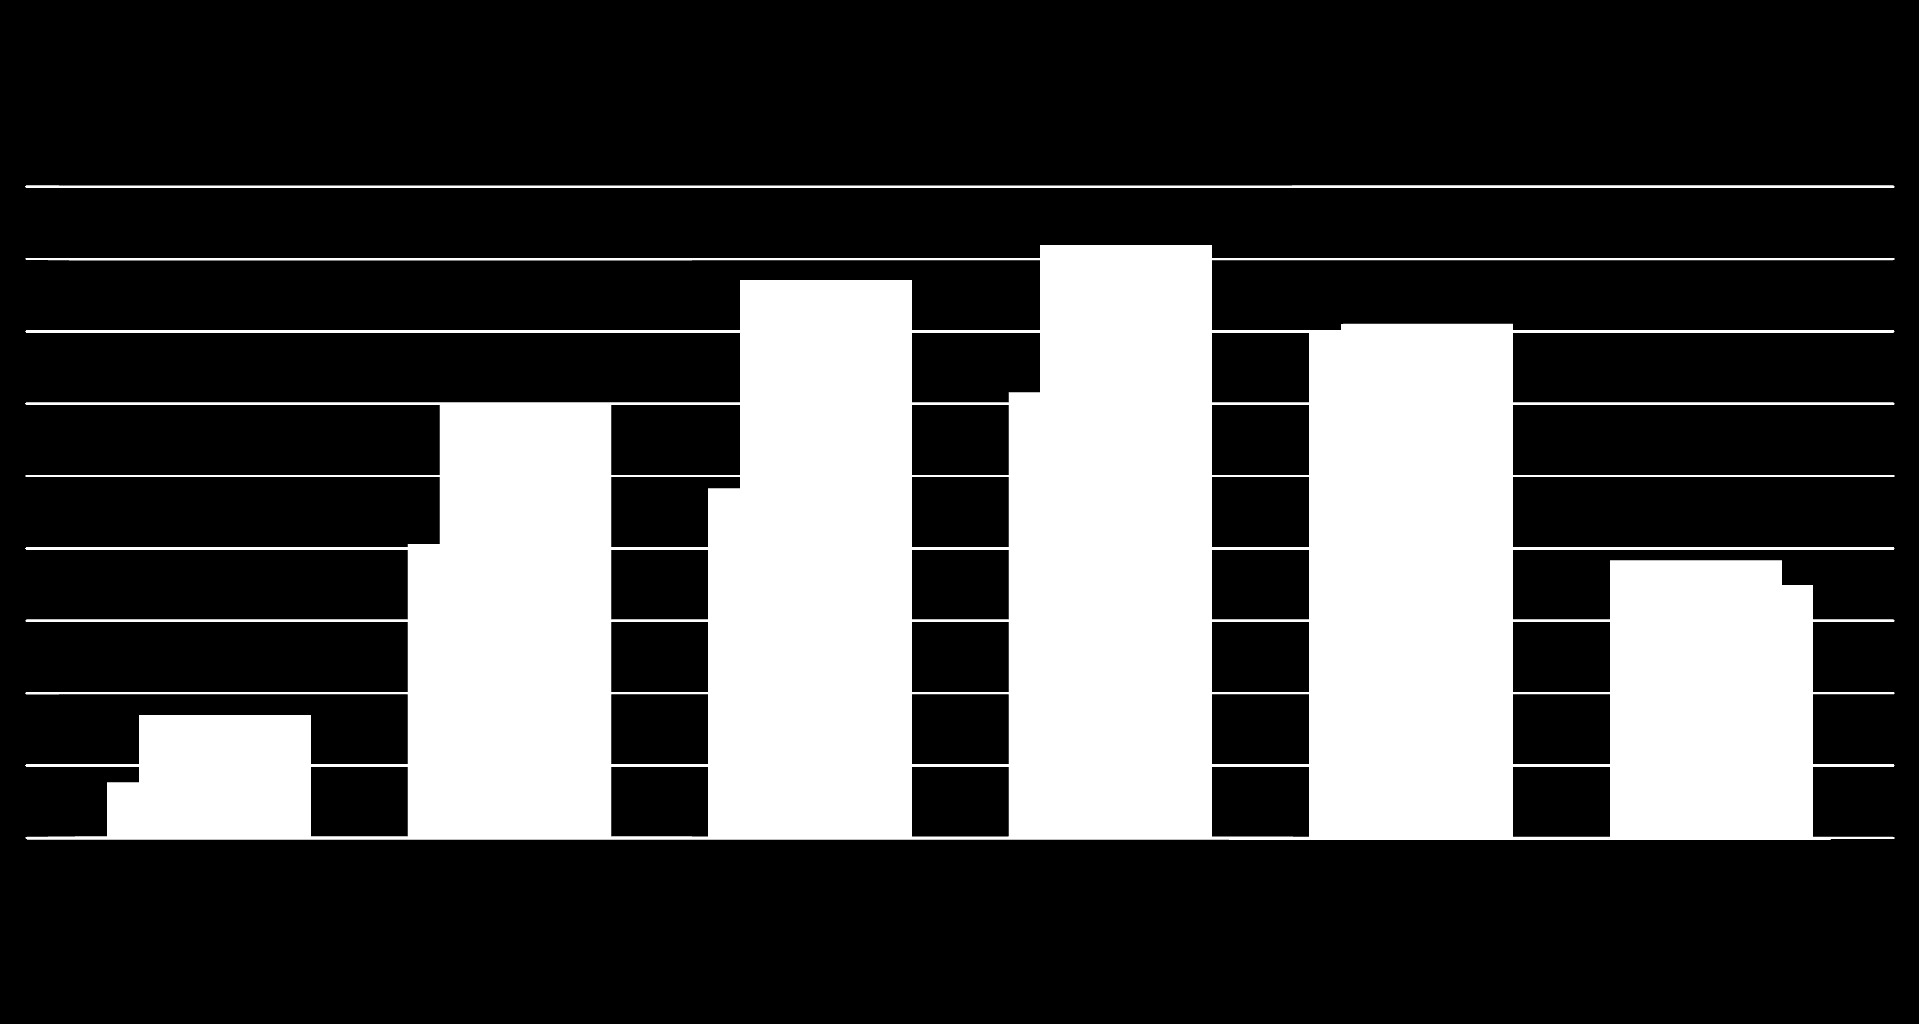 Messina occupati maschi per età raffronto 2007/2013 (valori in migliaia) 45 40 35 30 30 39 31